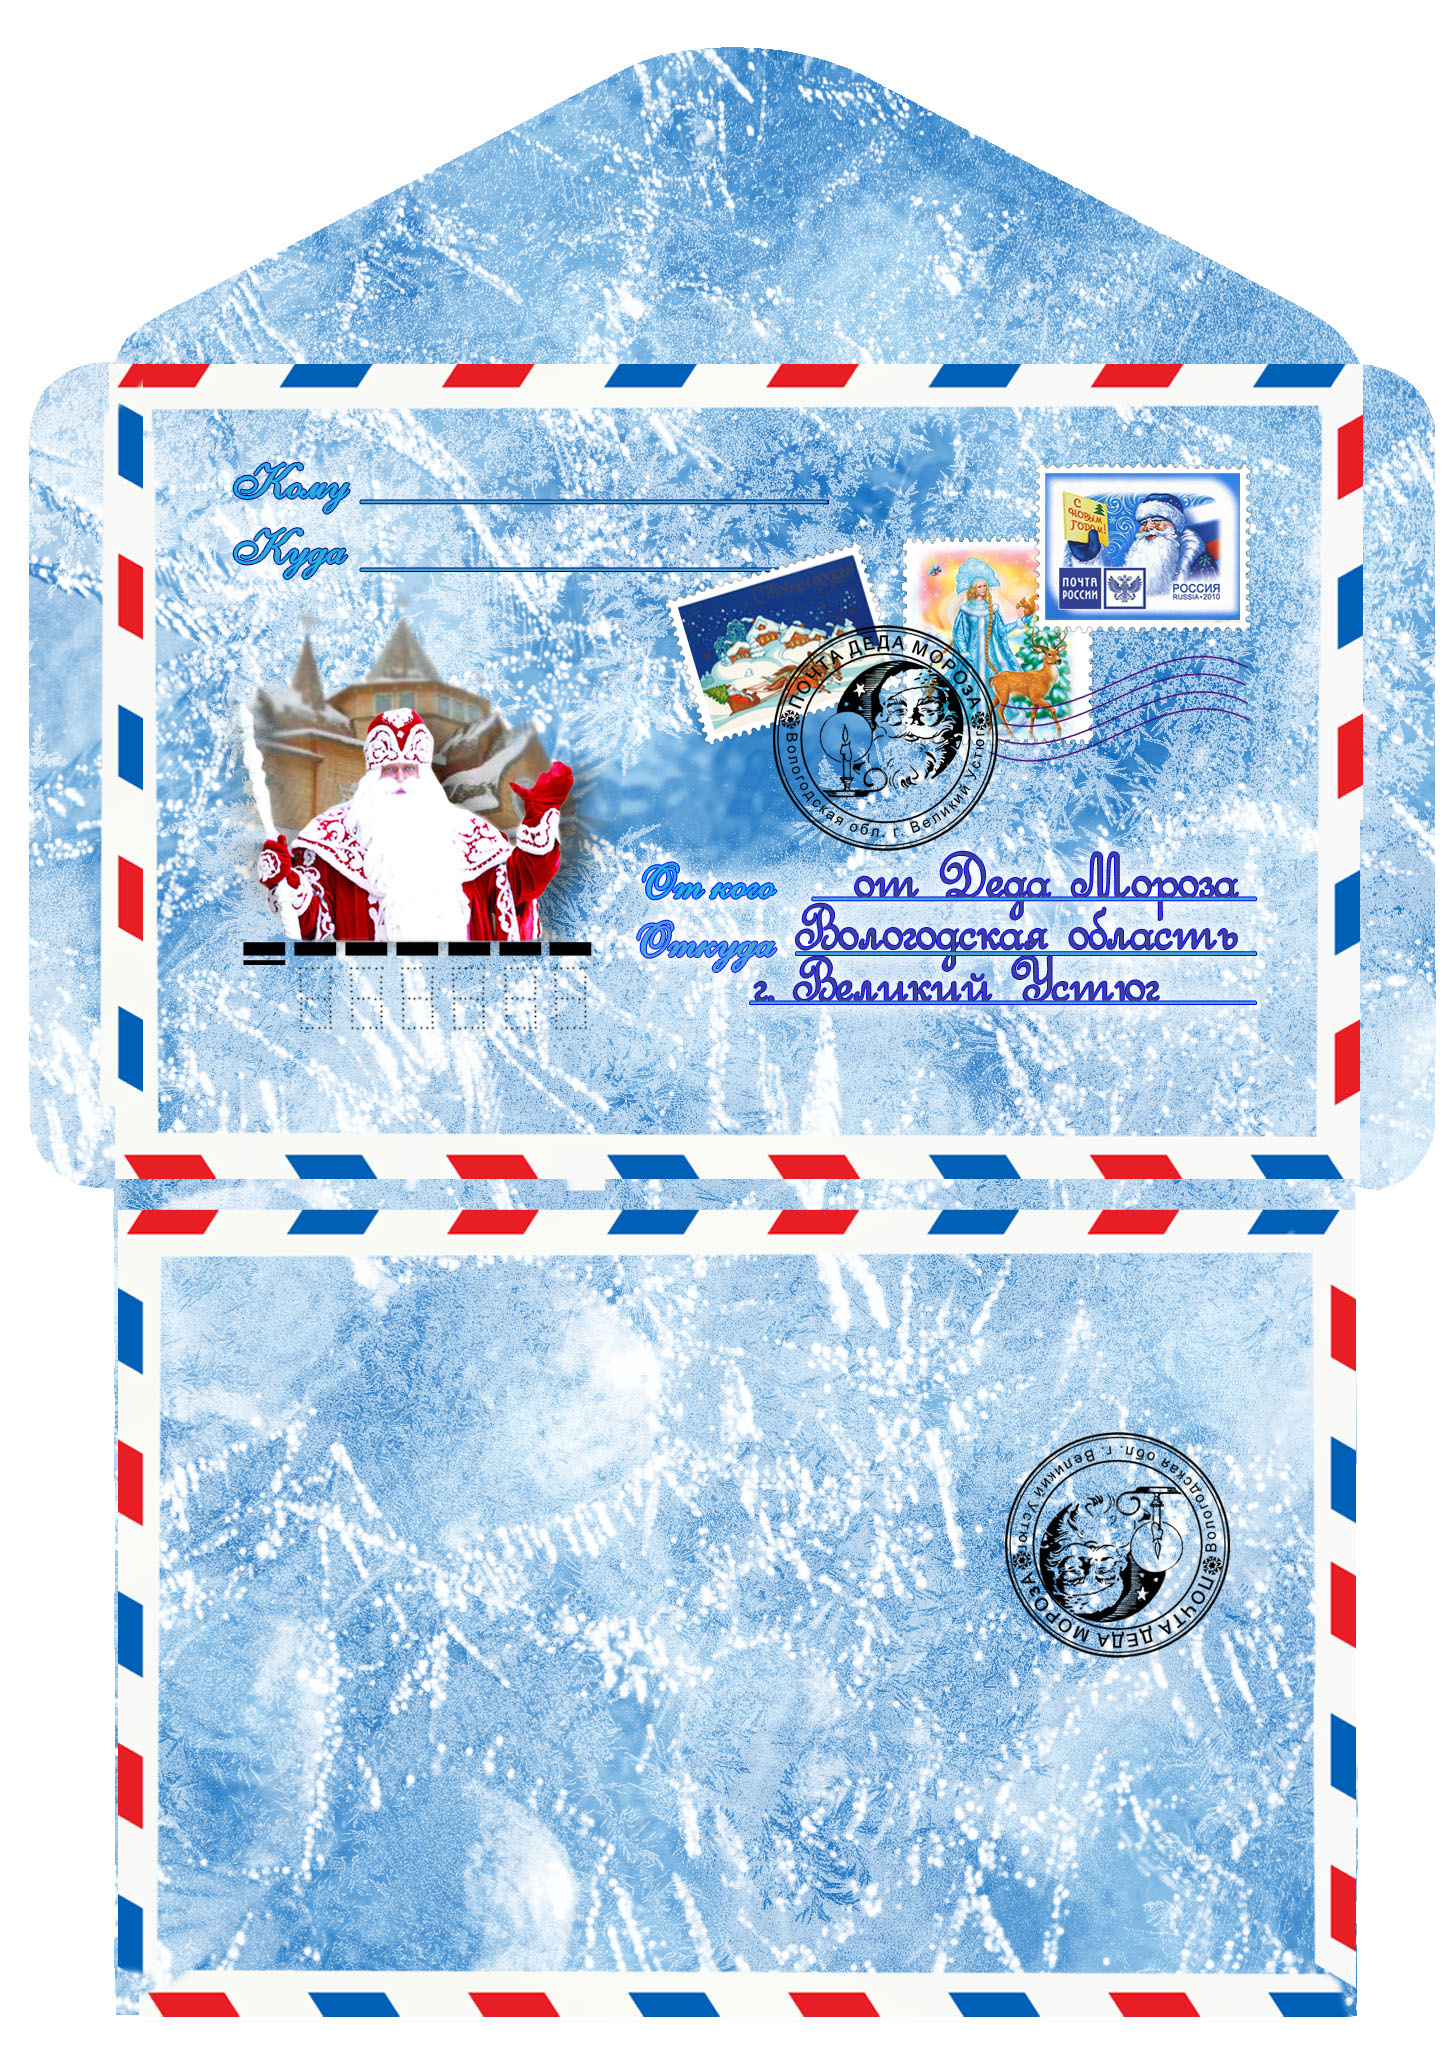 Envelope to Santa Claus Veliky Ustyug